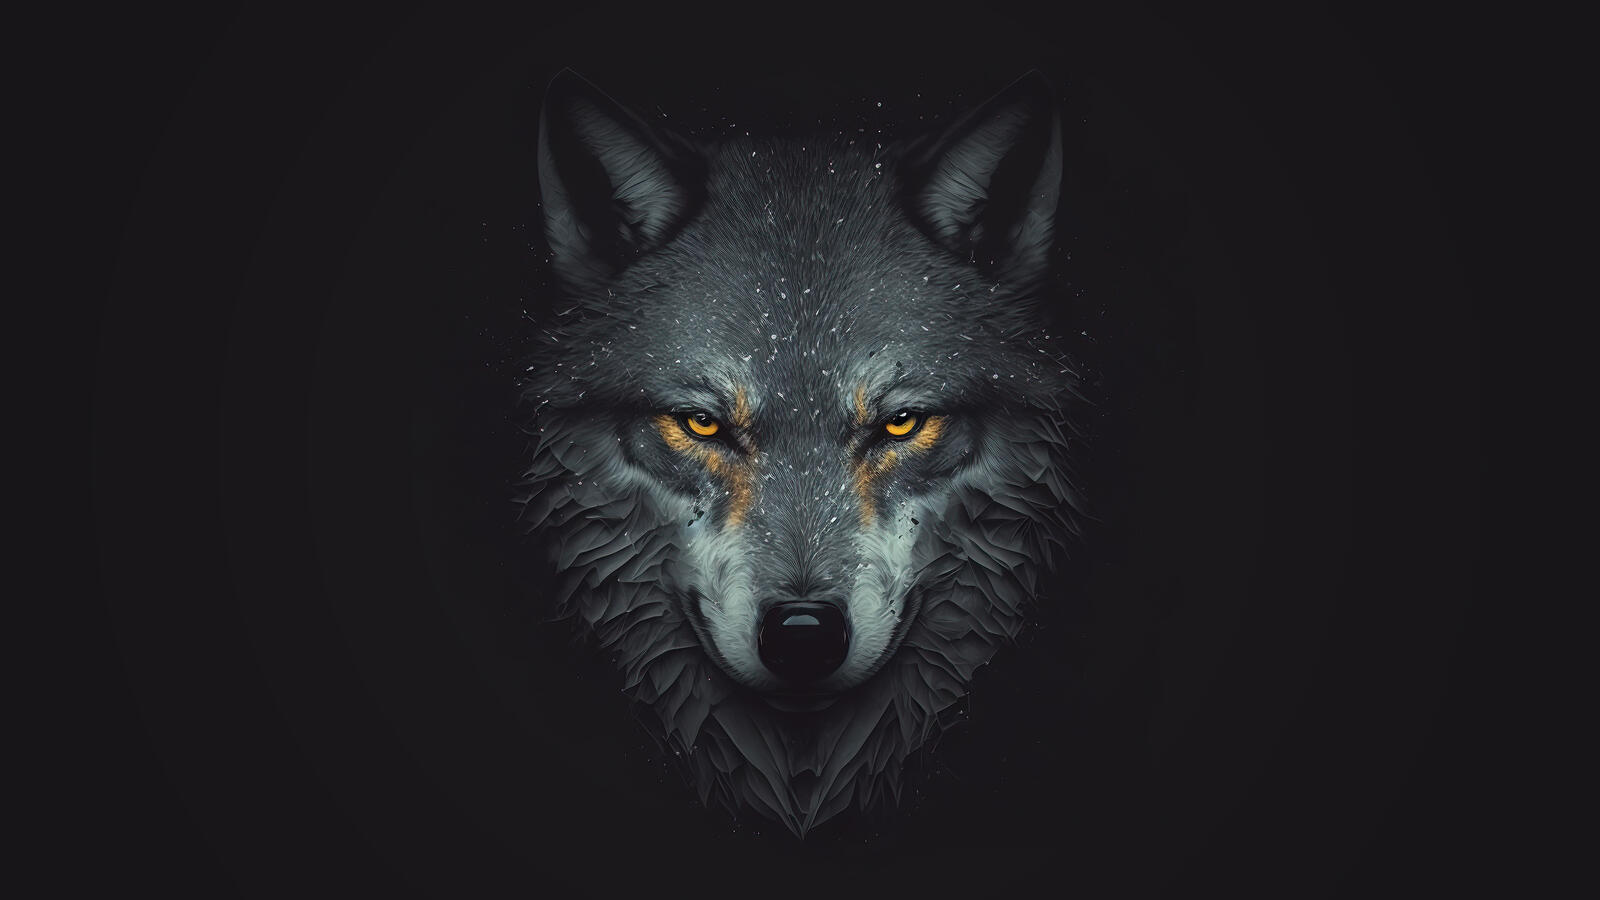 Бесплатное фото Рисунок серого волка на темном фоне